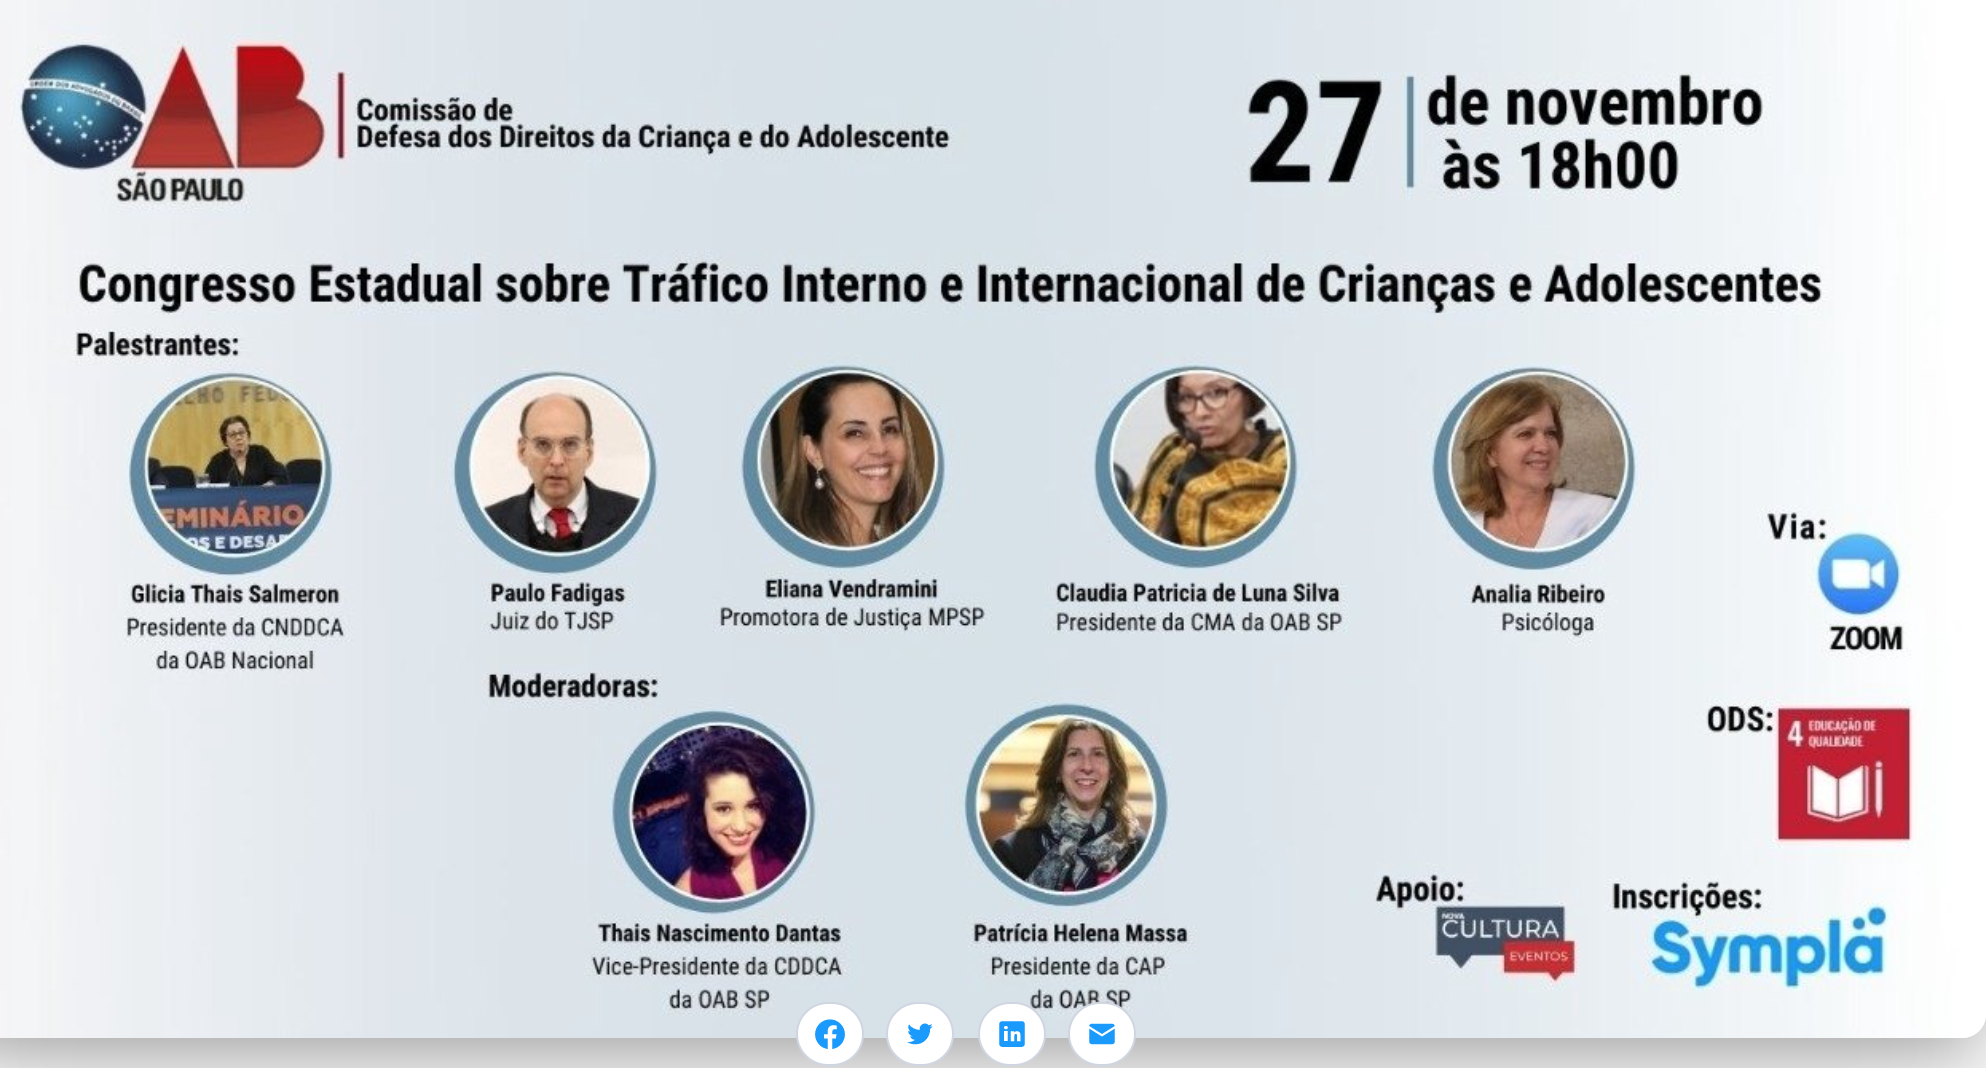 Congresso Estadual sobre Tráfico Interno e Internacional de